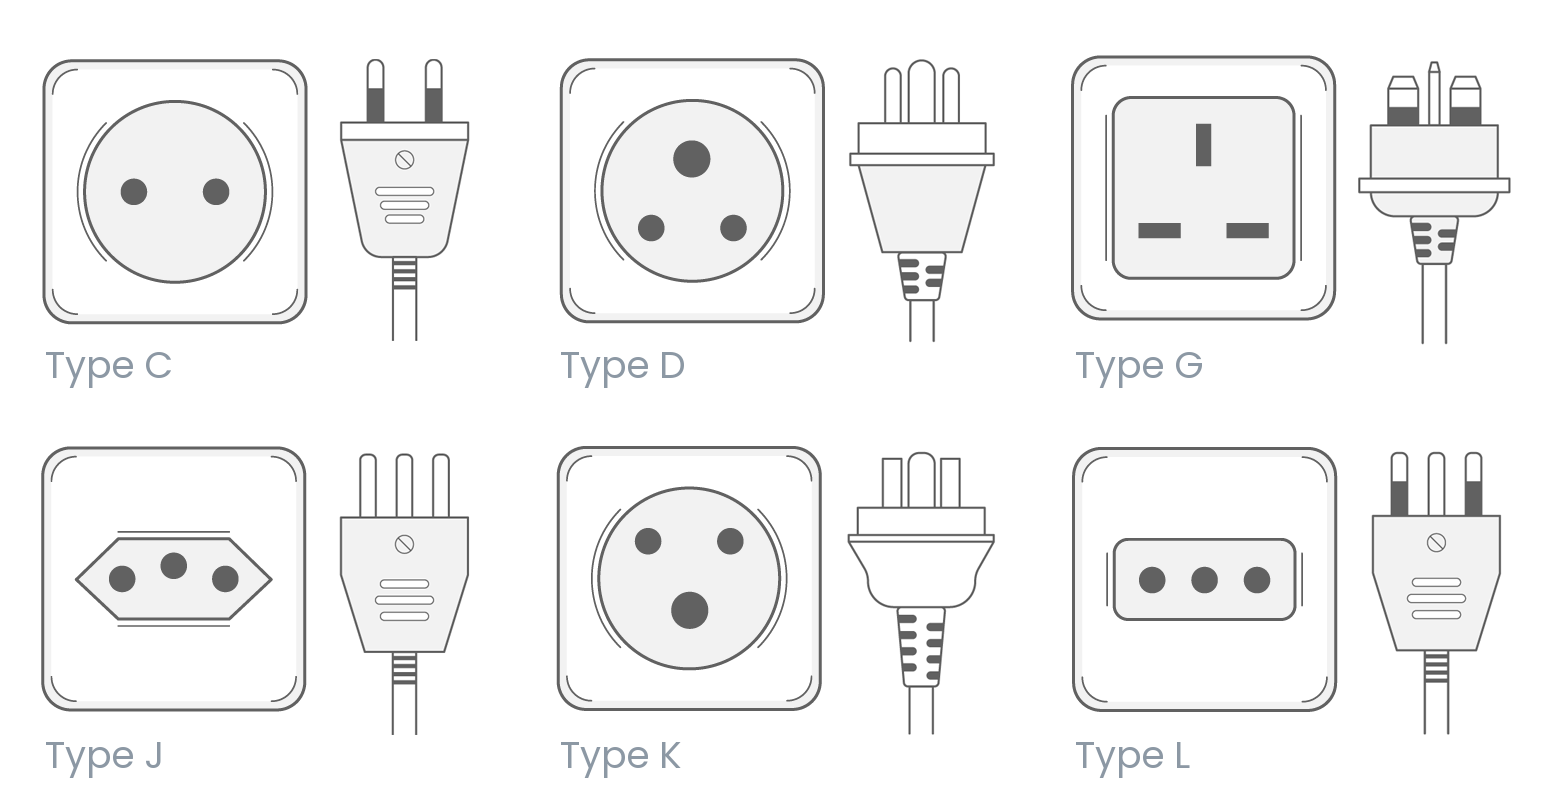 Maldives power plug outlet type J